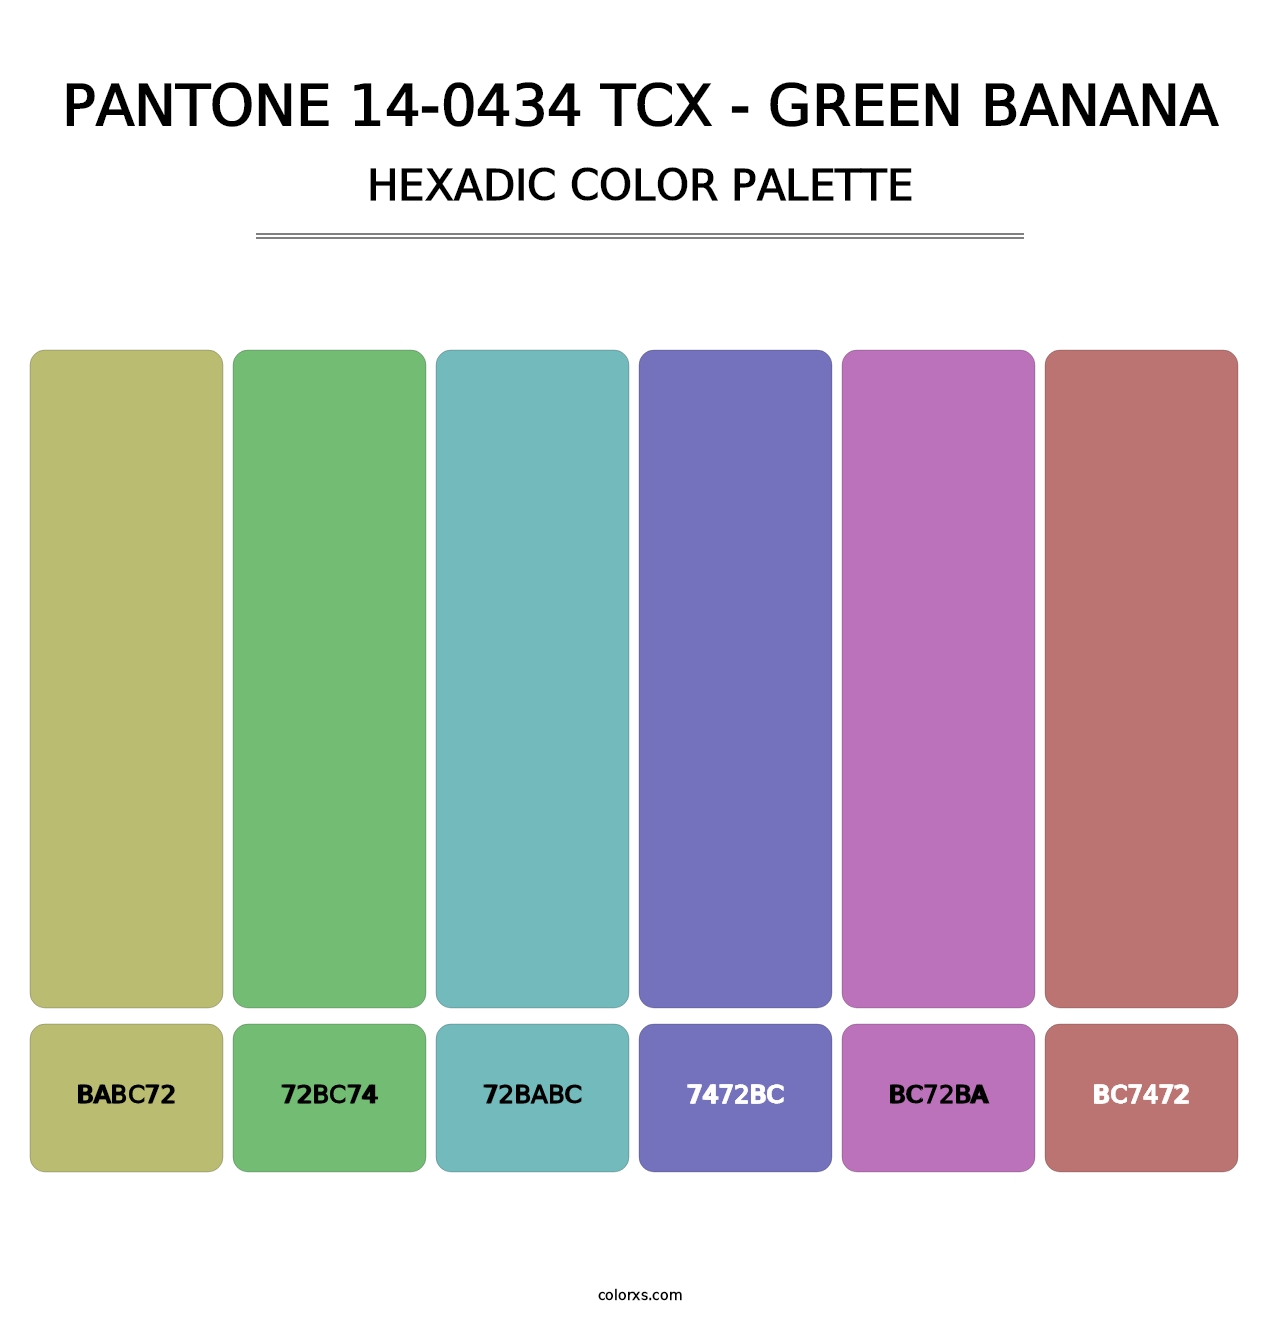 PANTONE 14-0434 TCX - Green Banana - Hexadic Color Palette